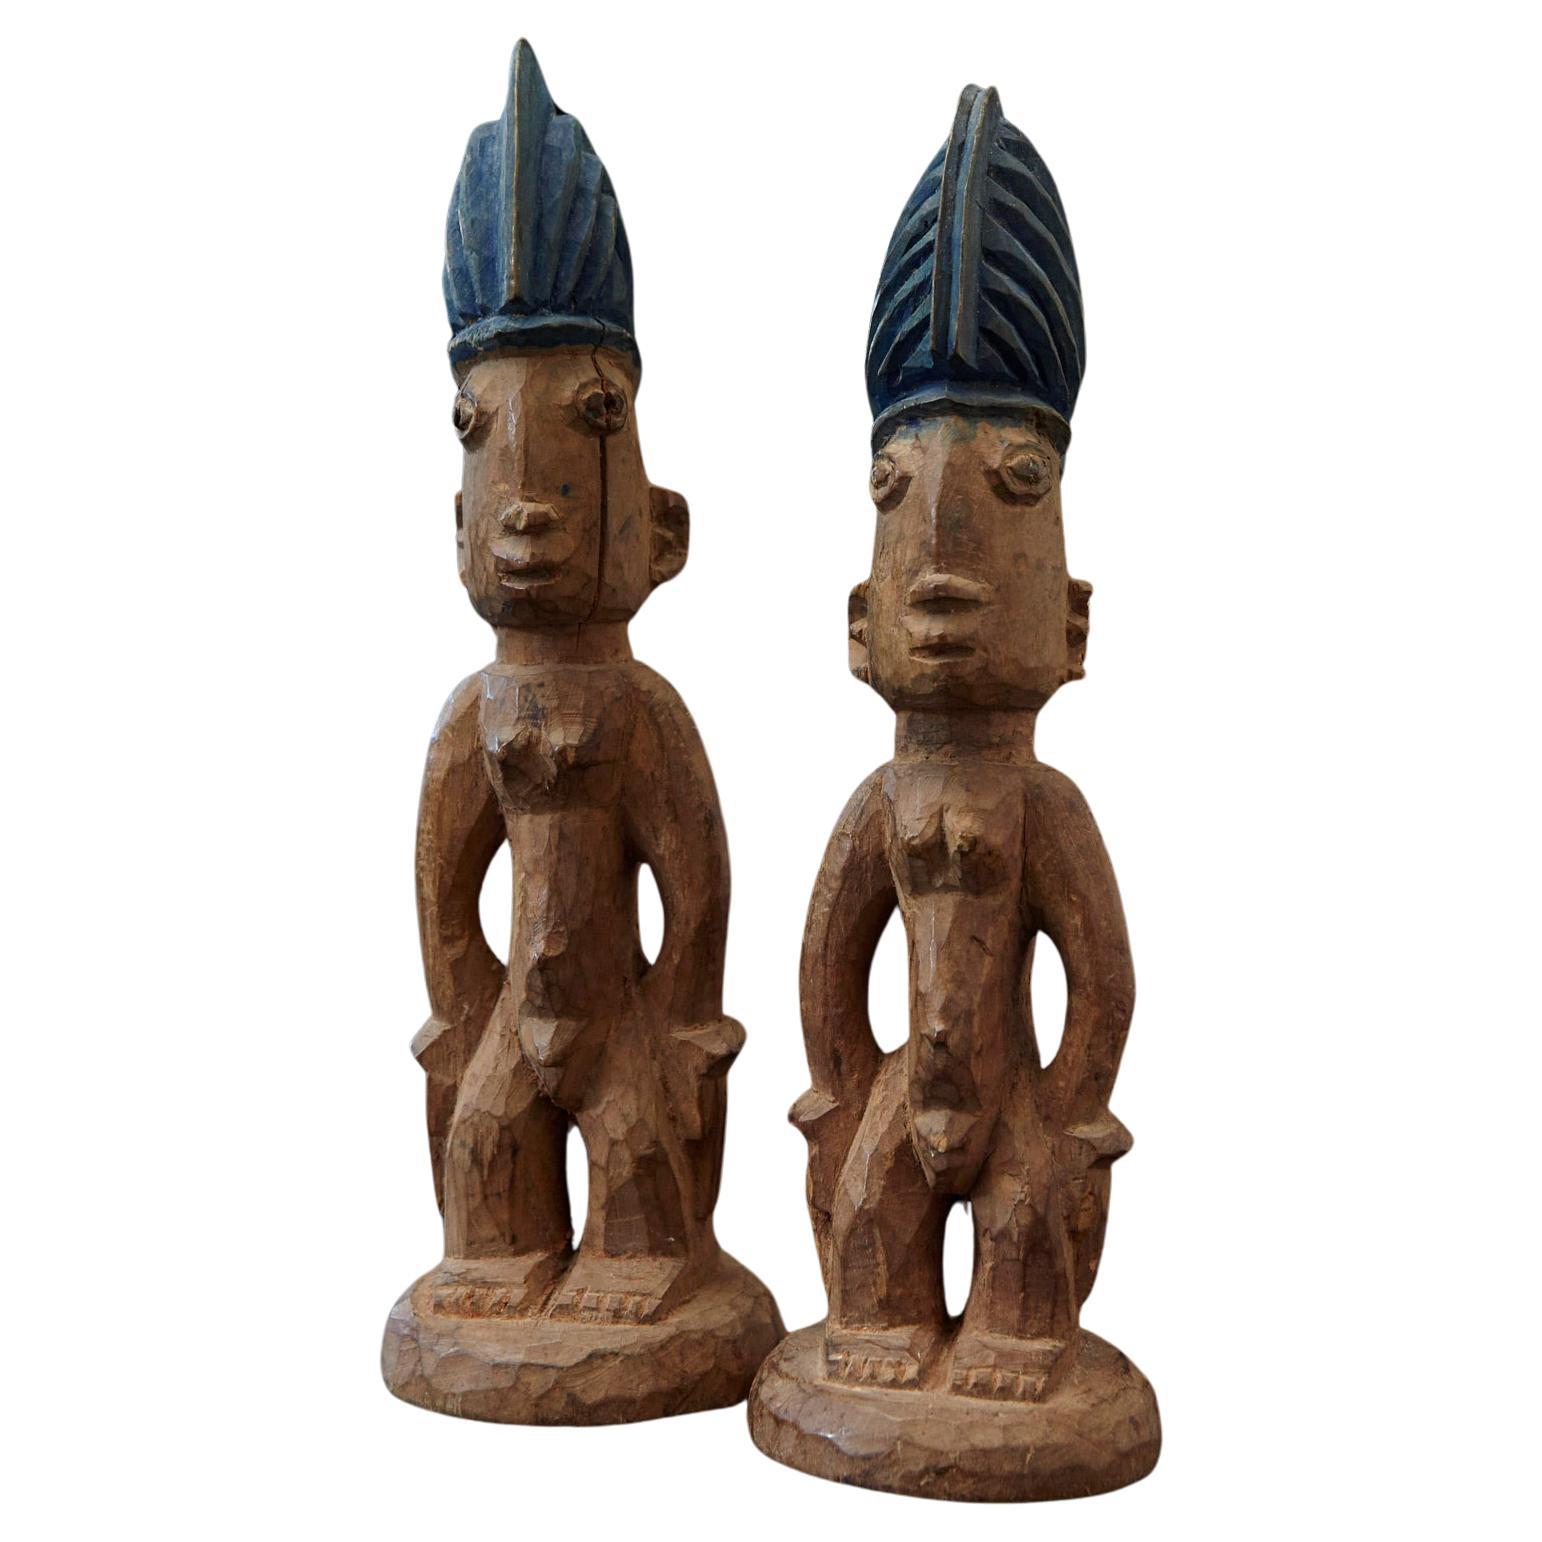 Eres Ibeji Gedenkfiguren-Paar, Egba, Yoruba People, Nigeria, 20. Jahrhundert